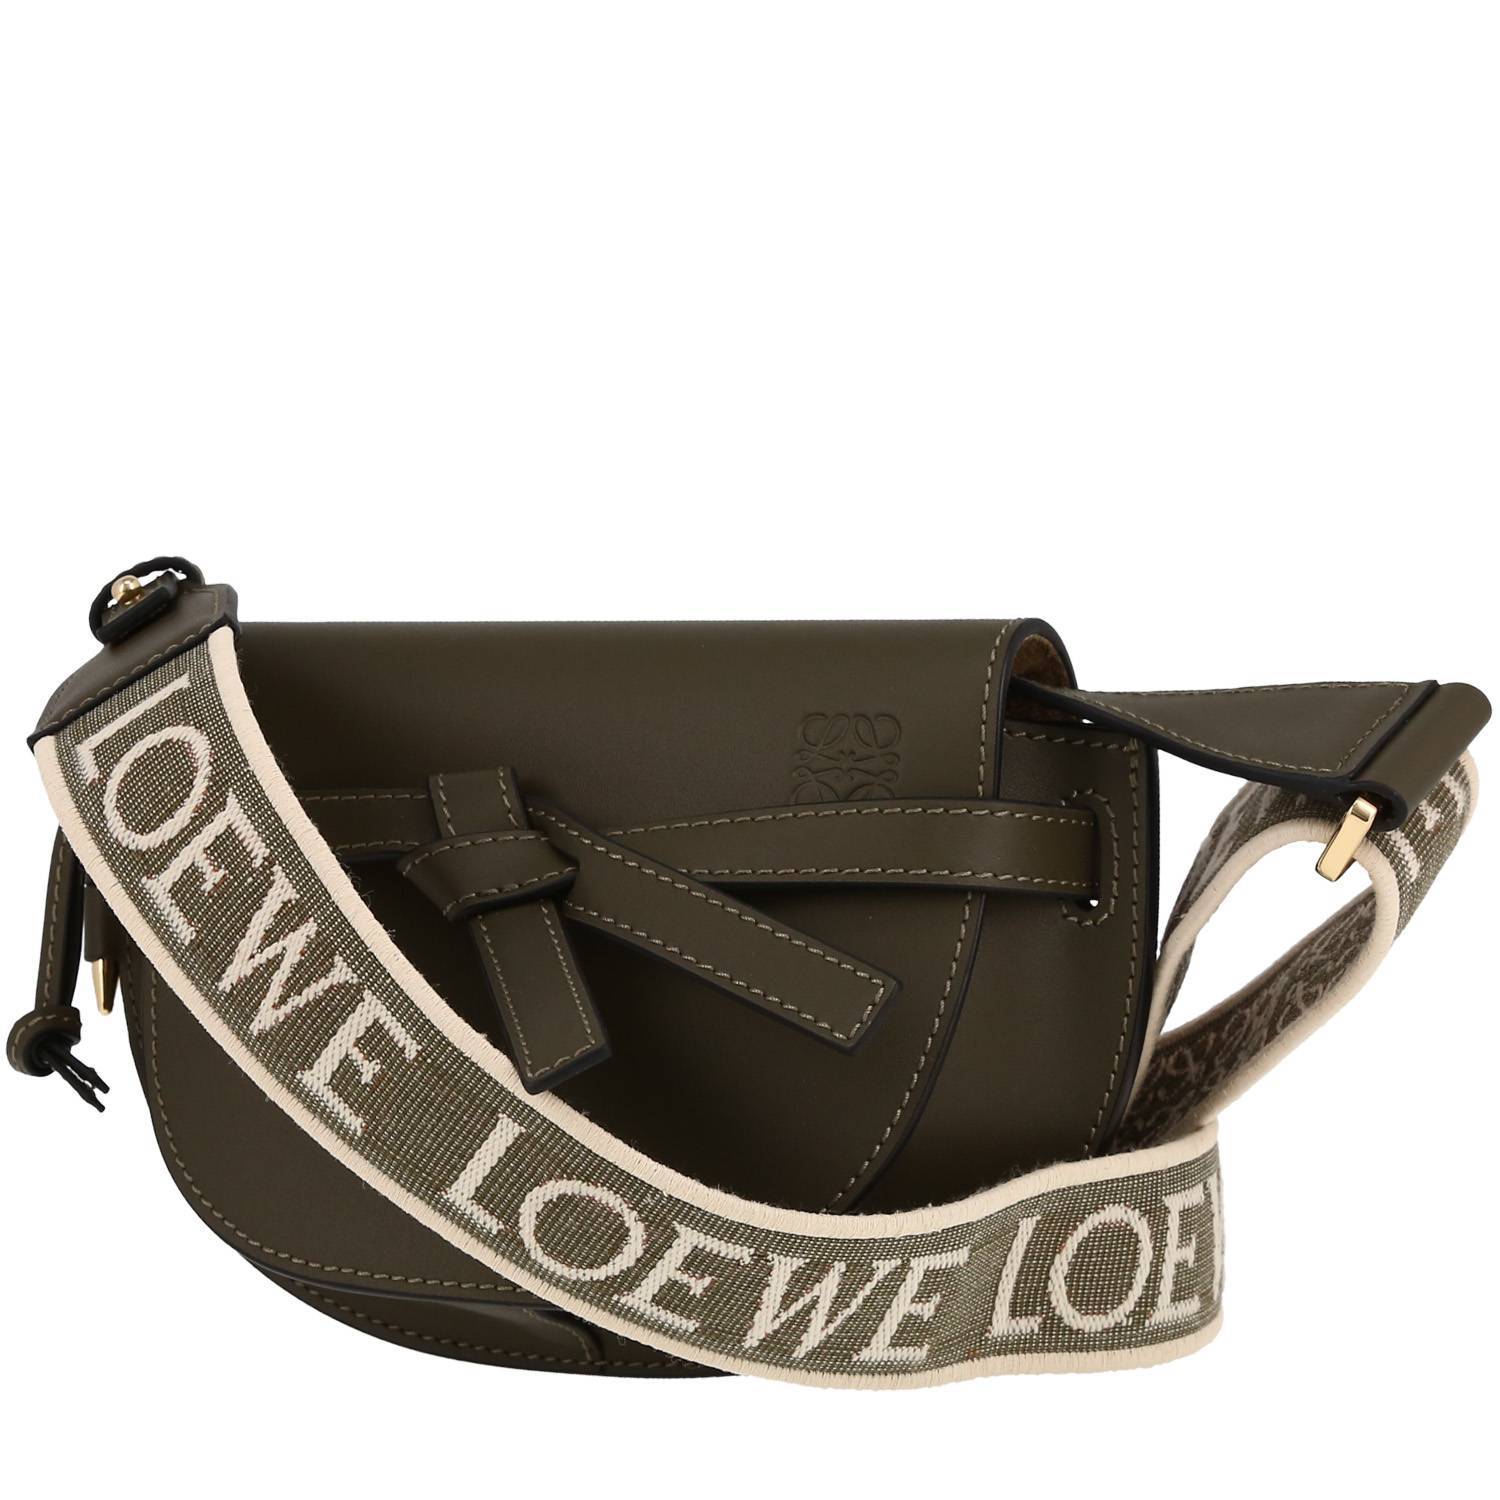 Handbag In Khaki Leather